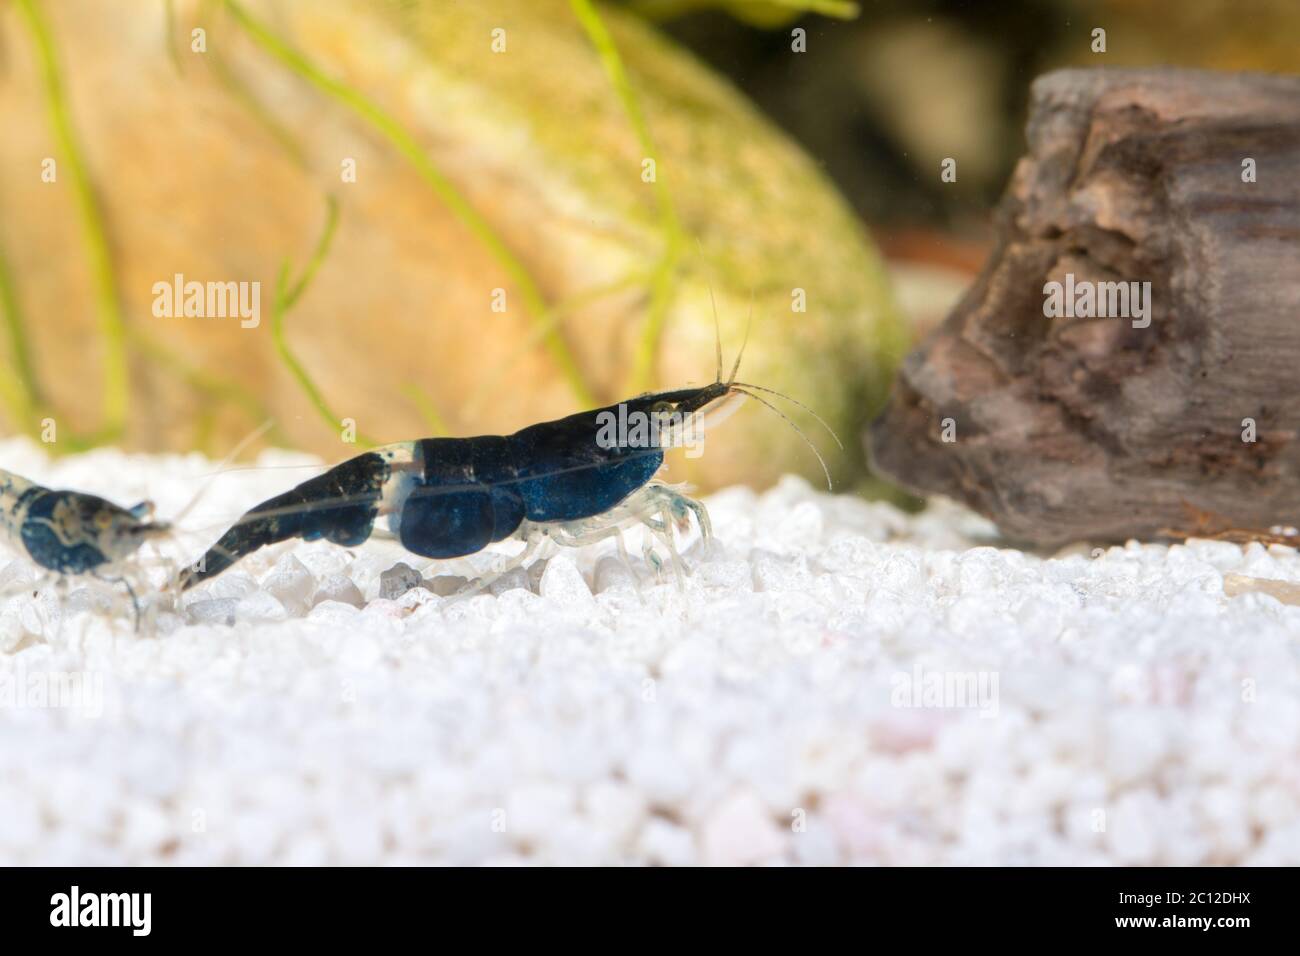 Freshwater shrimp closeup shot in aquarium (genus Neocaridina) Stock Photo